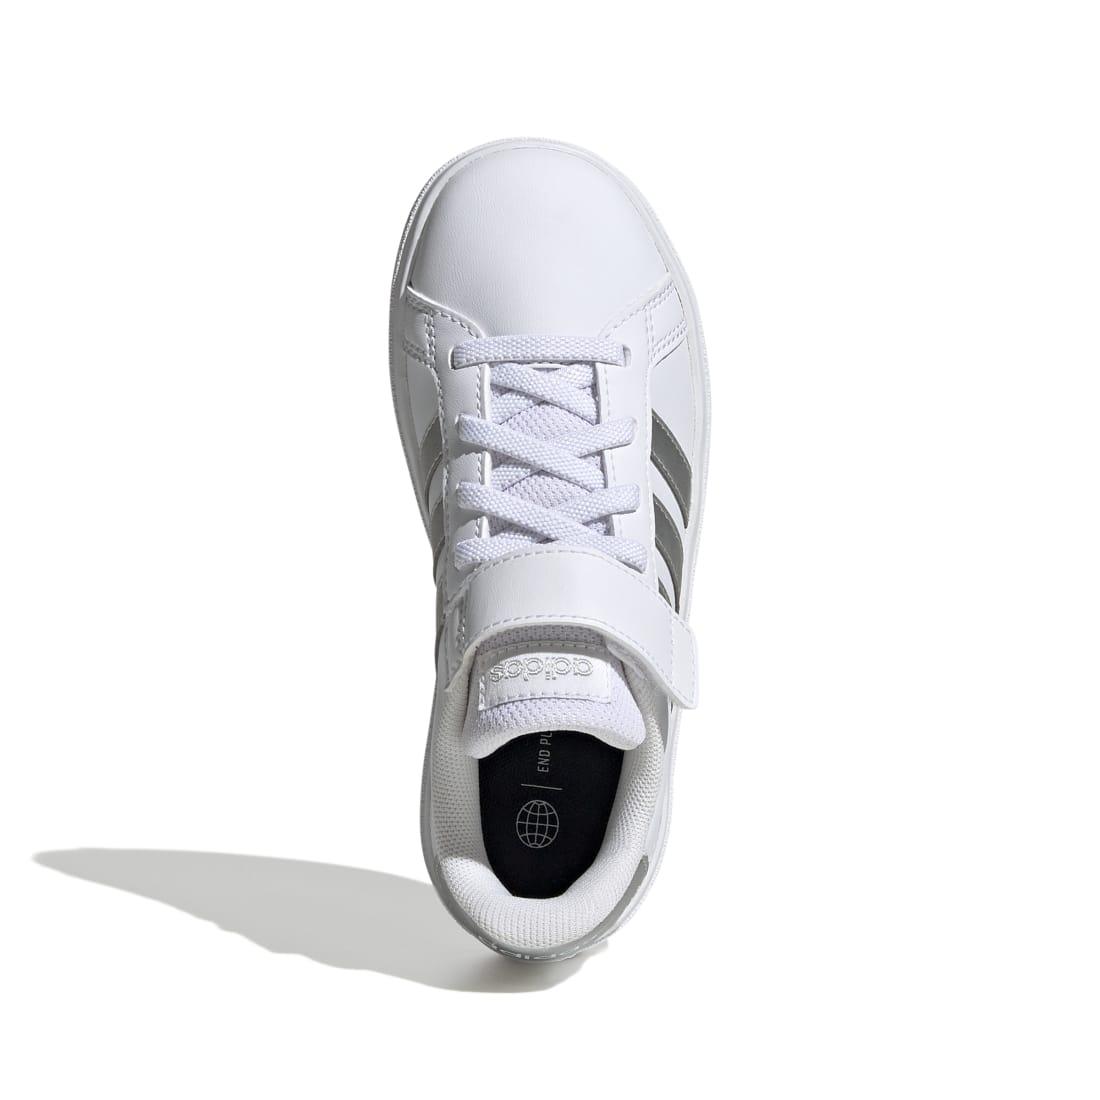 Adidas Παιδικά Grand Court Λευκά Ασημί Αυτοκόλητο - elBimbo - Κέρκυρα